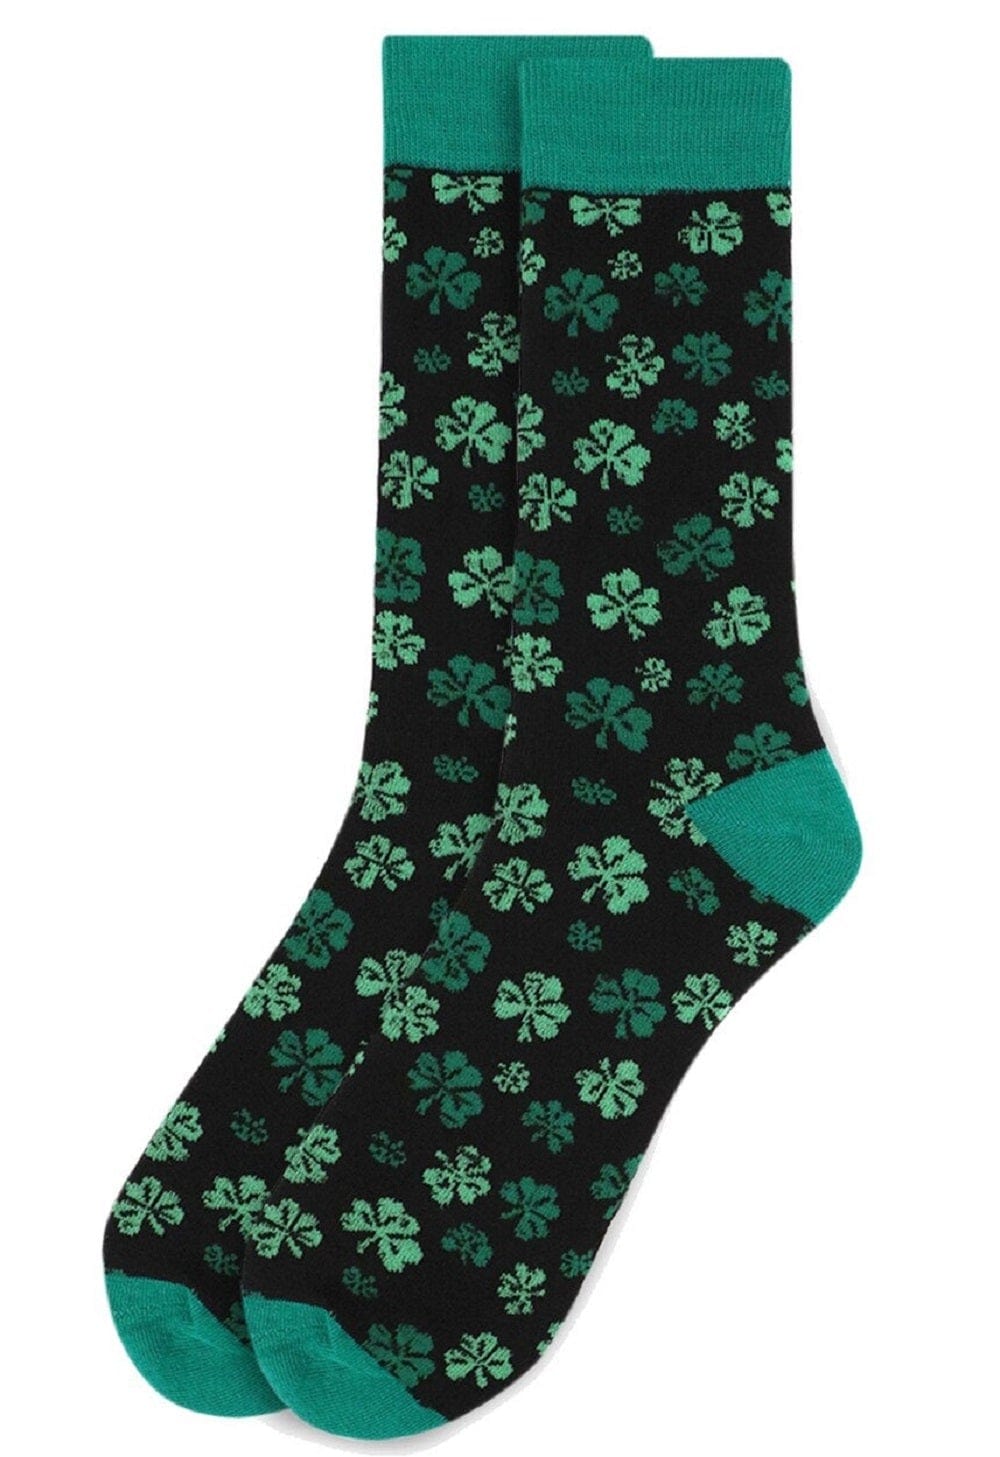 St Patrick's Day Four Leaf Clover Socks Men's & Women's Size Crew